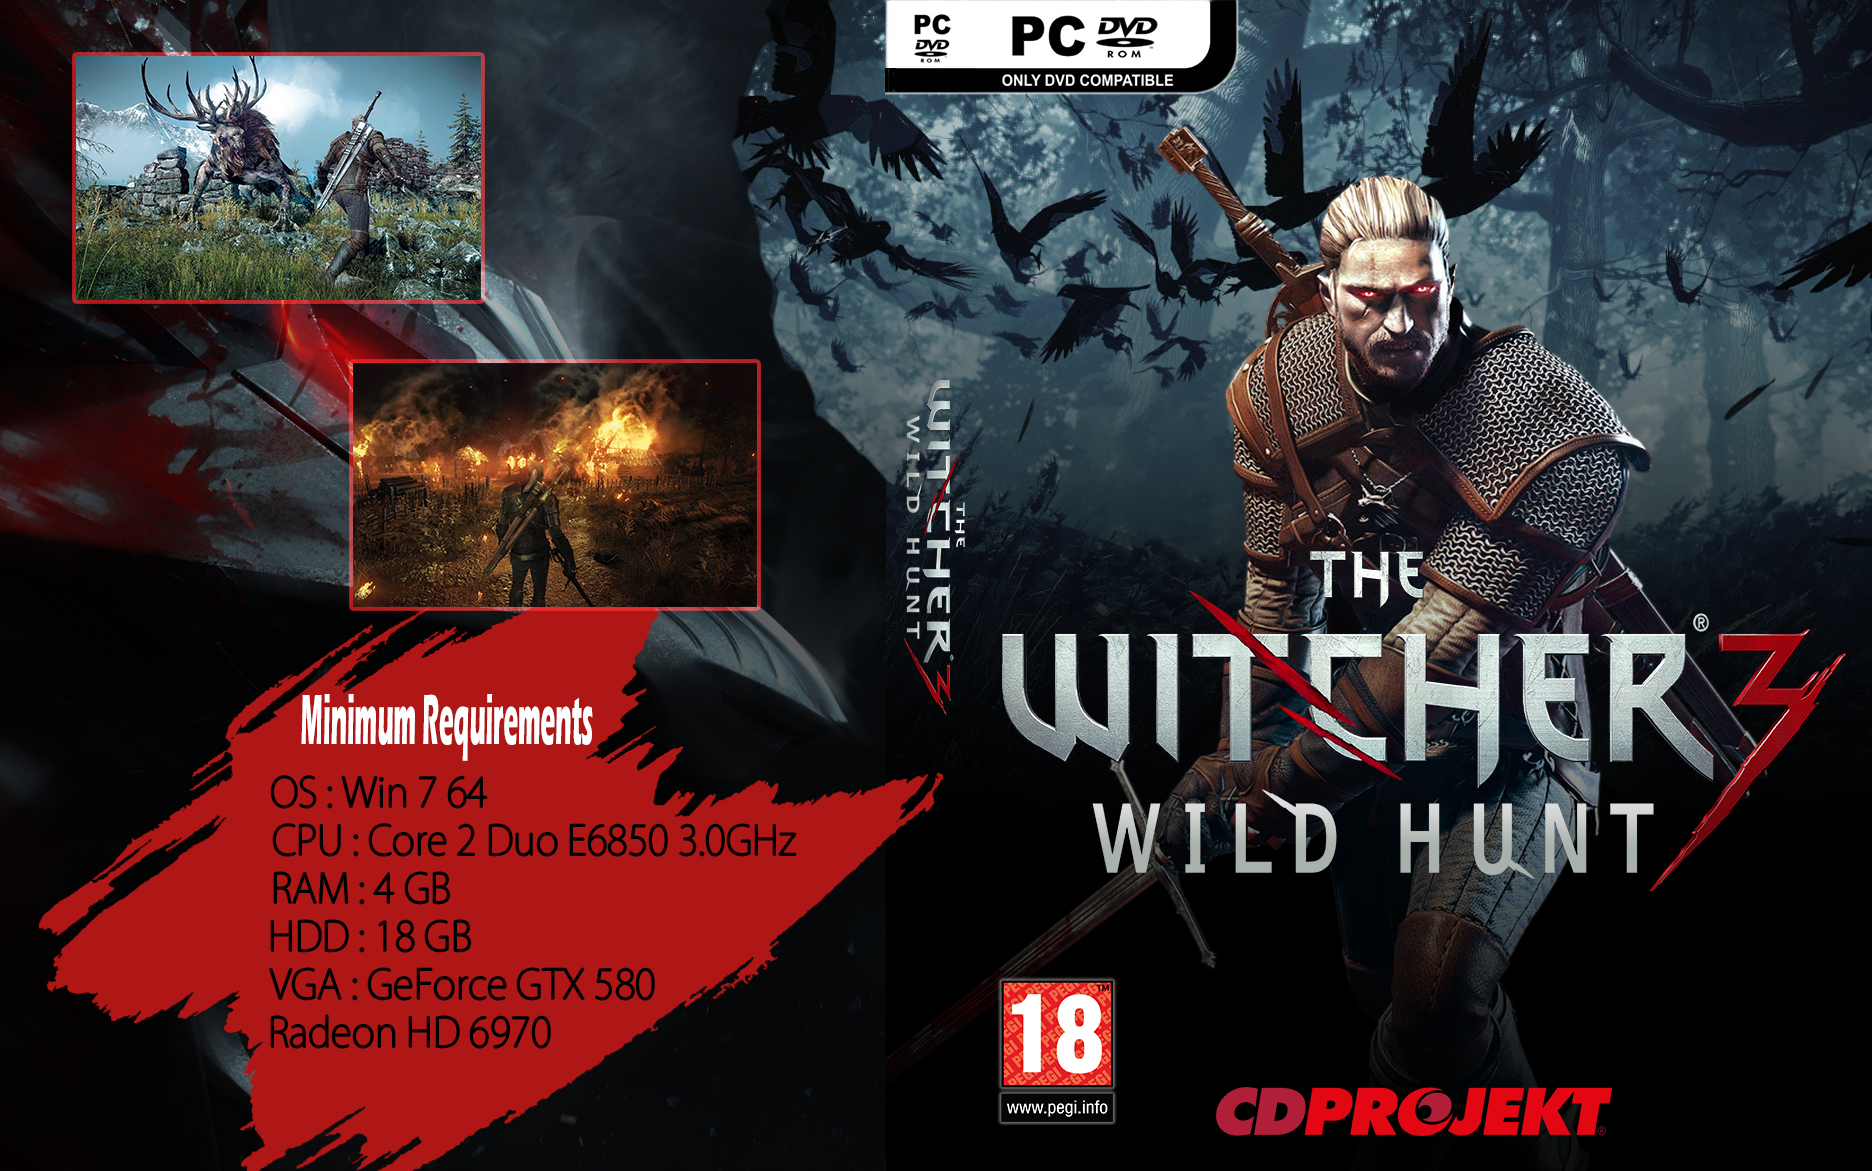 Ведьмак 3 диск. The Witcher 3 Wild Hunt диск. Ведьмак 3 Дикая охота диск на PC. Ведьмак 3 диск ps4. Программа передач на дикая охота